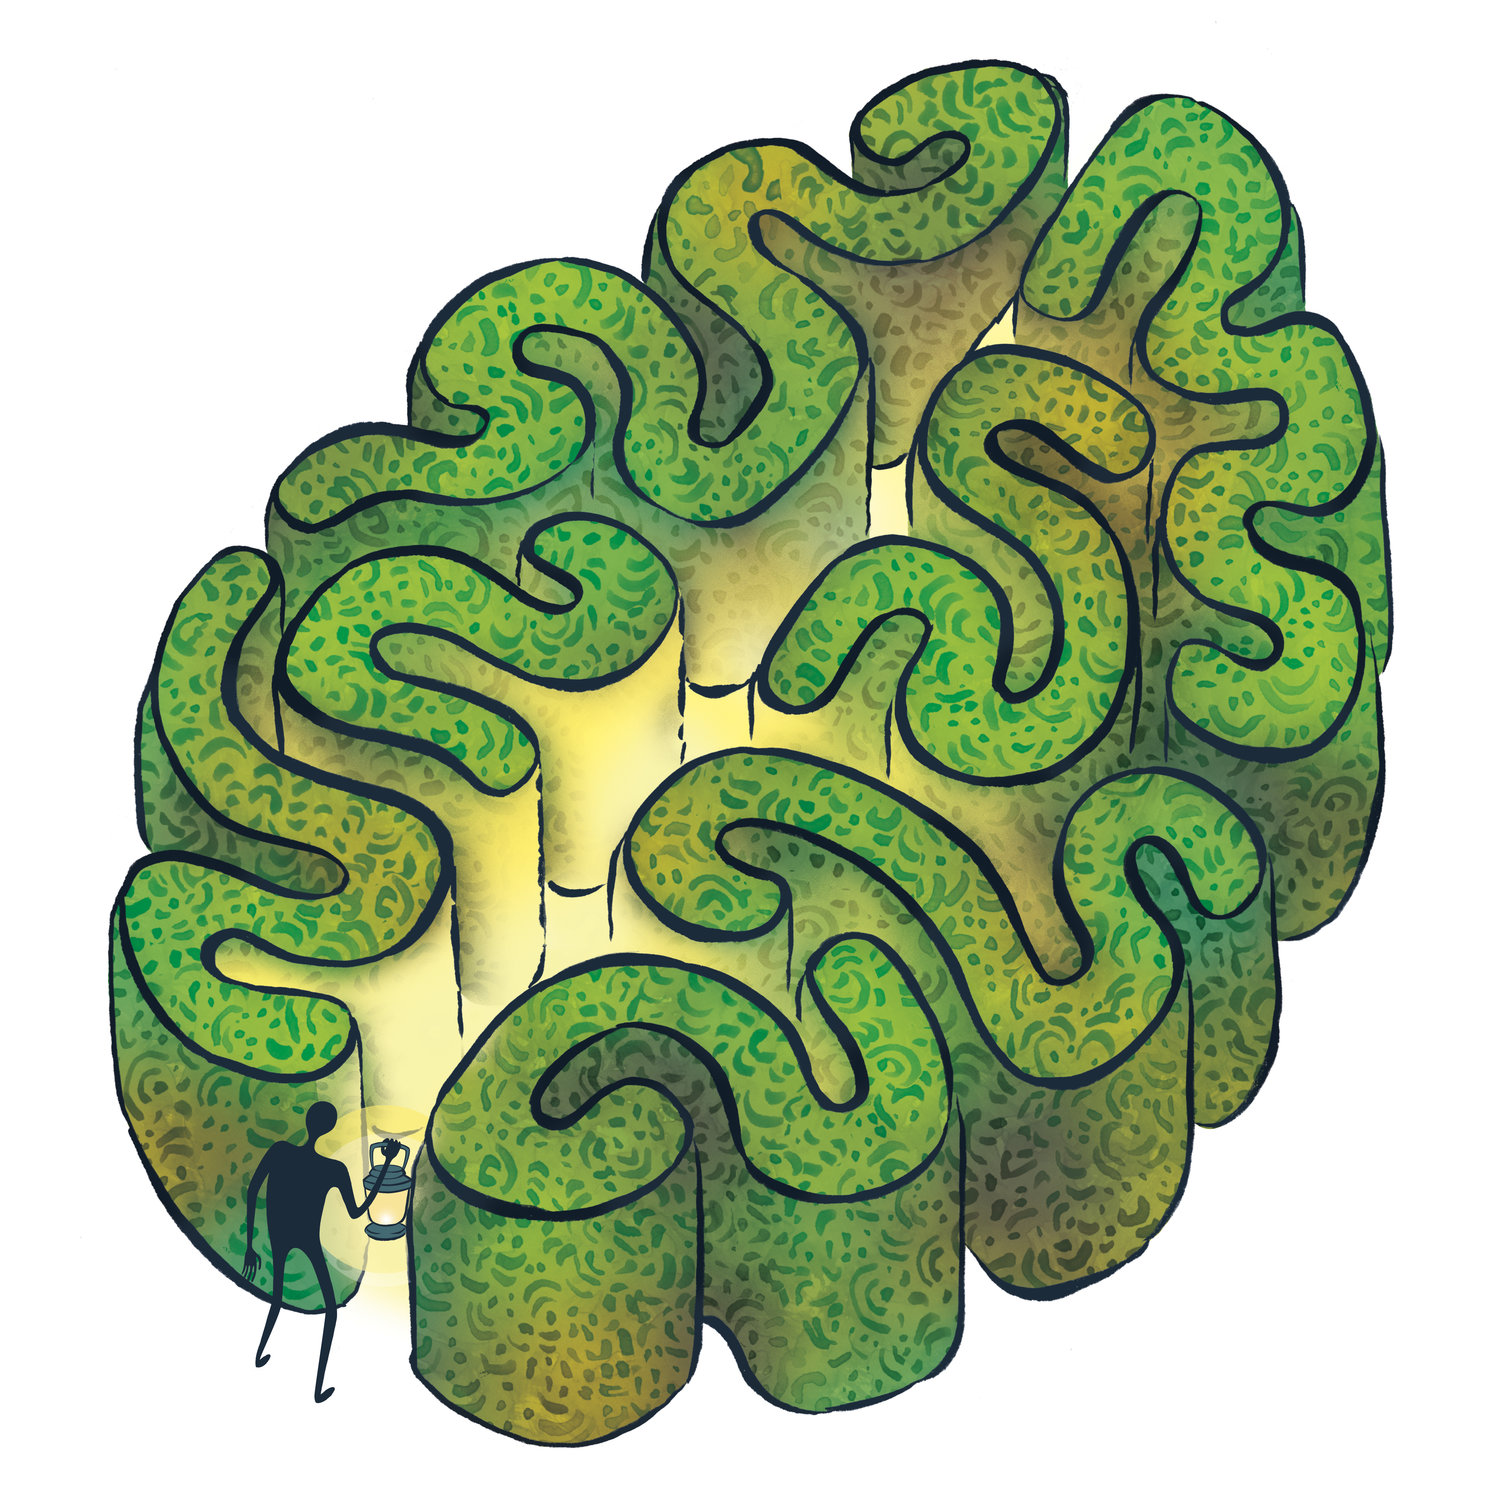 Illustration of brain by Jenna Luecke.